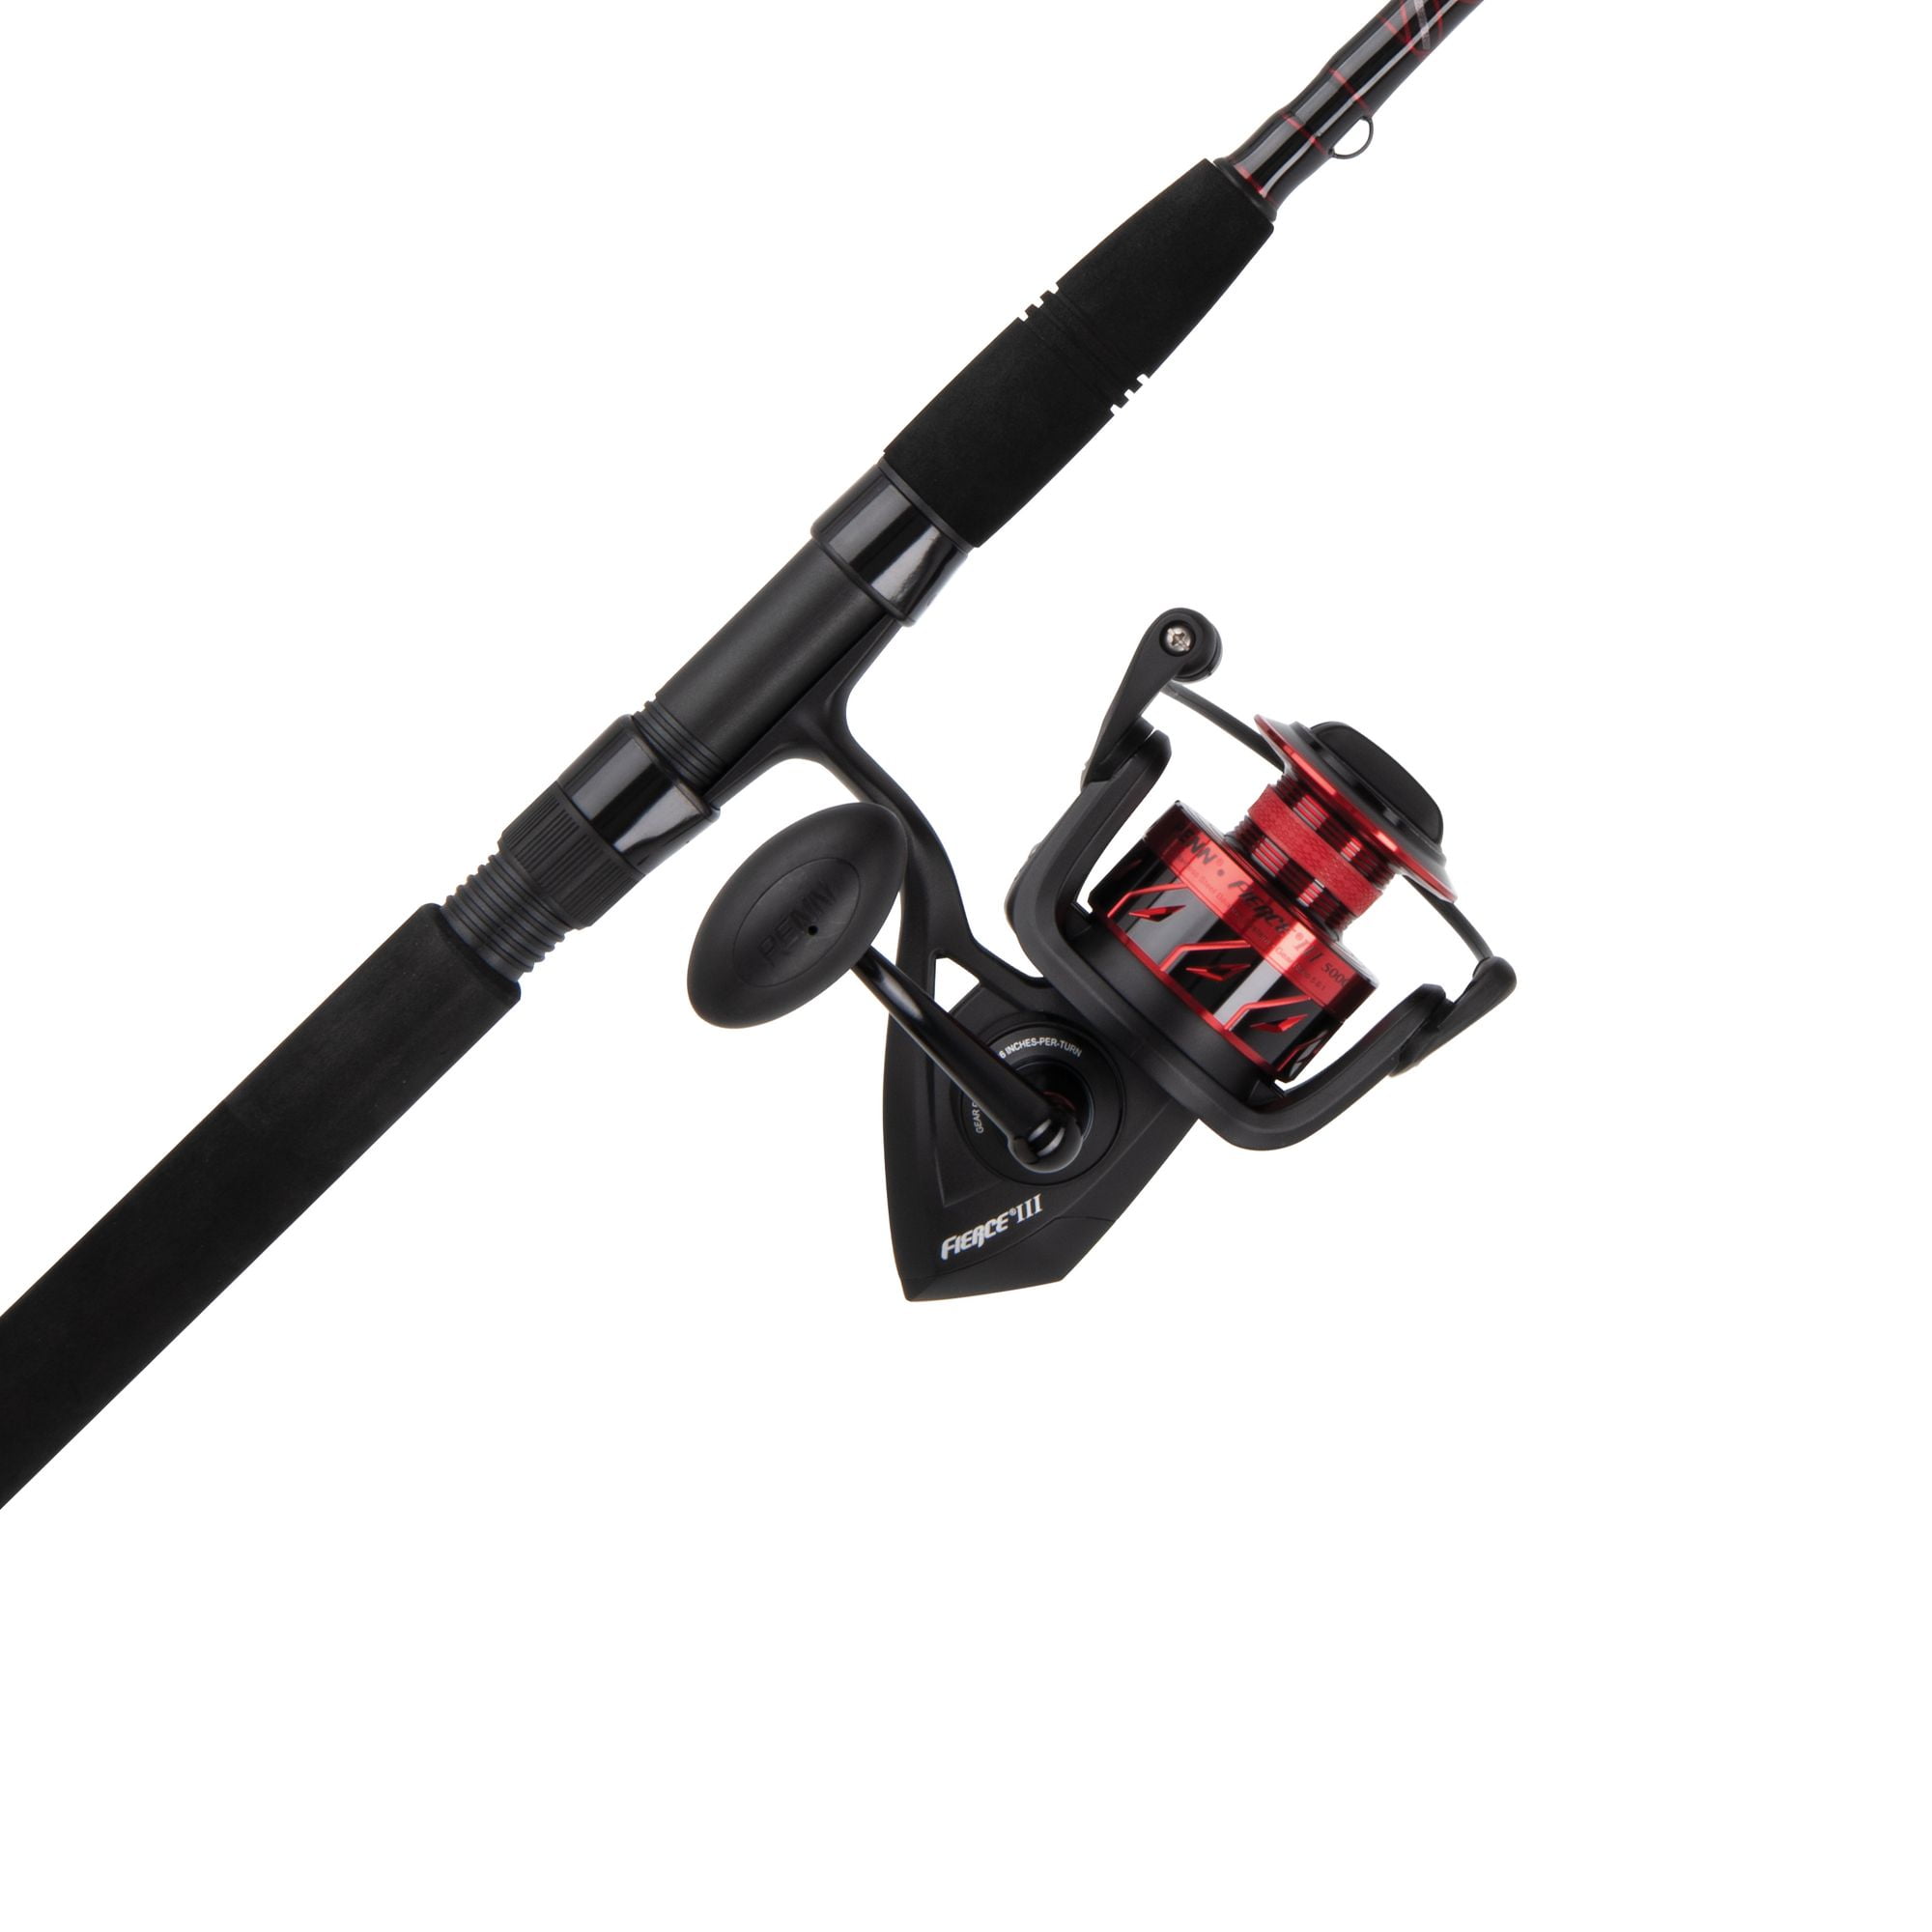 PENN 7’ Fierce III Fishing Rod and Reel Spinning Combo